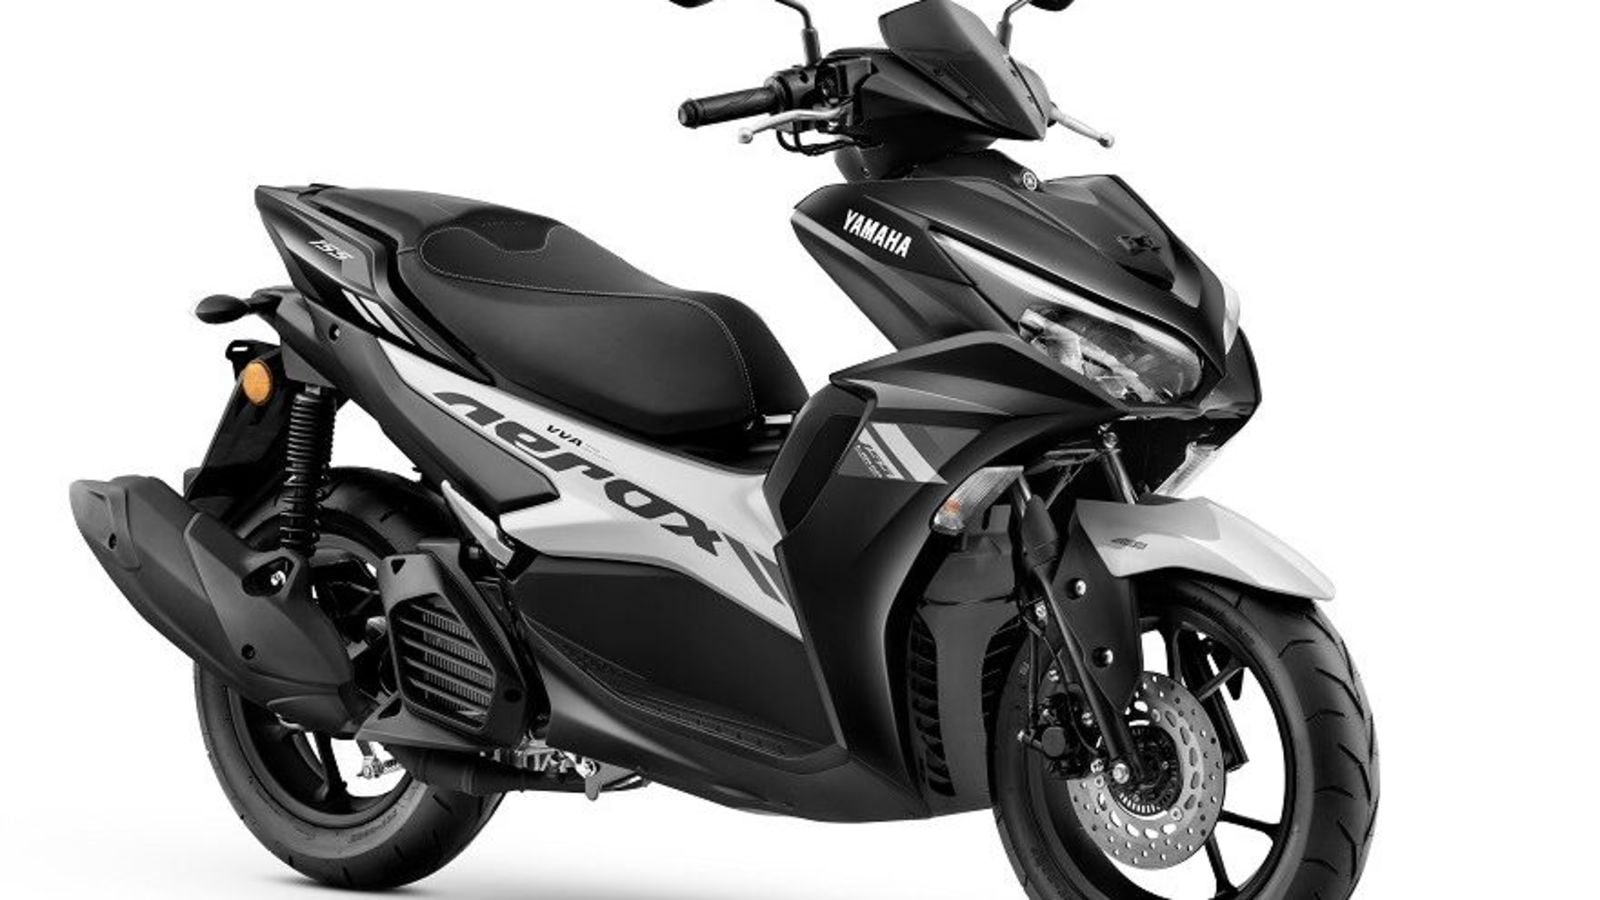 Yamaha Aerox Launched In New Metallic Black Variant Ht Auto